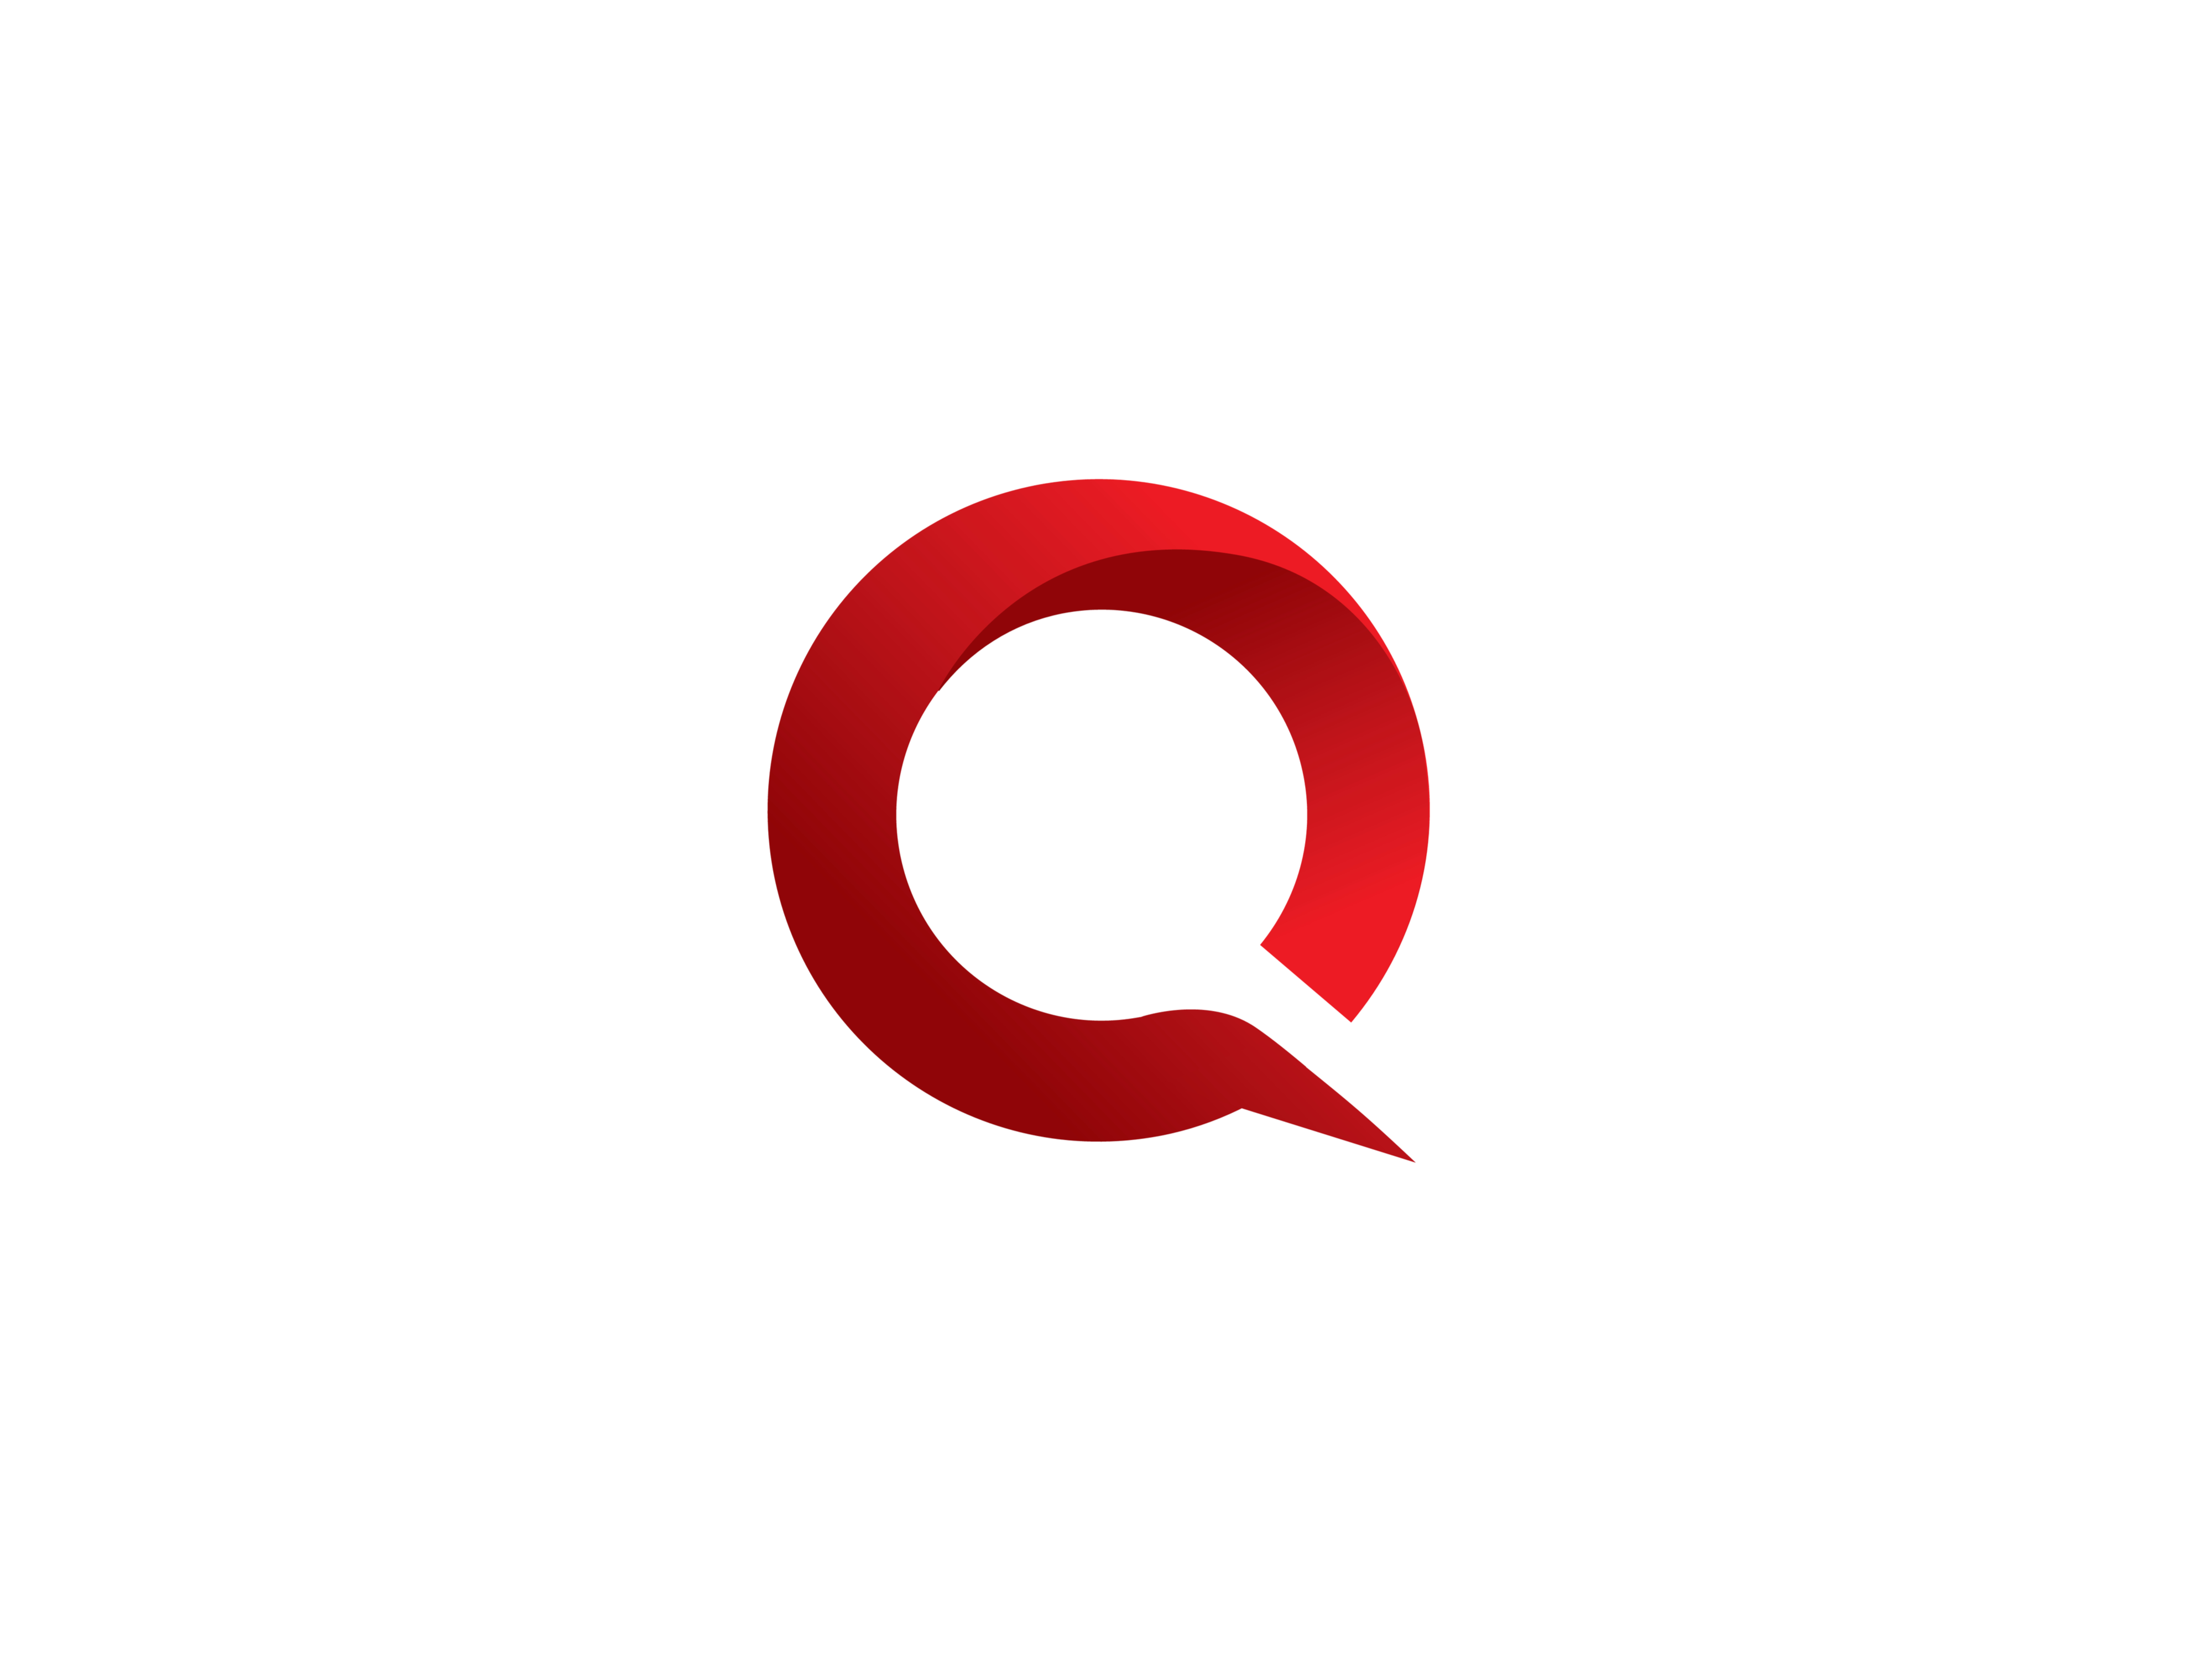 The Letter ‘Q’ Quiz